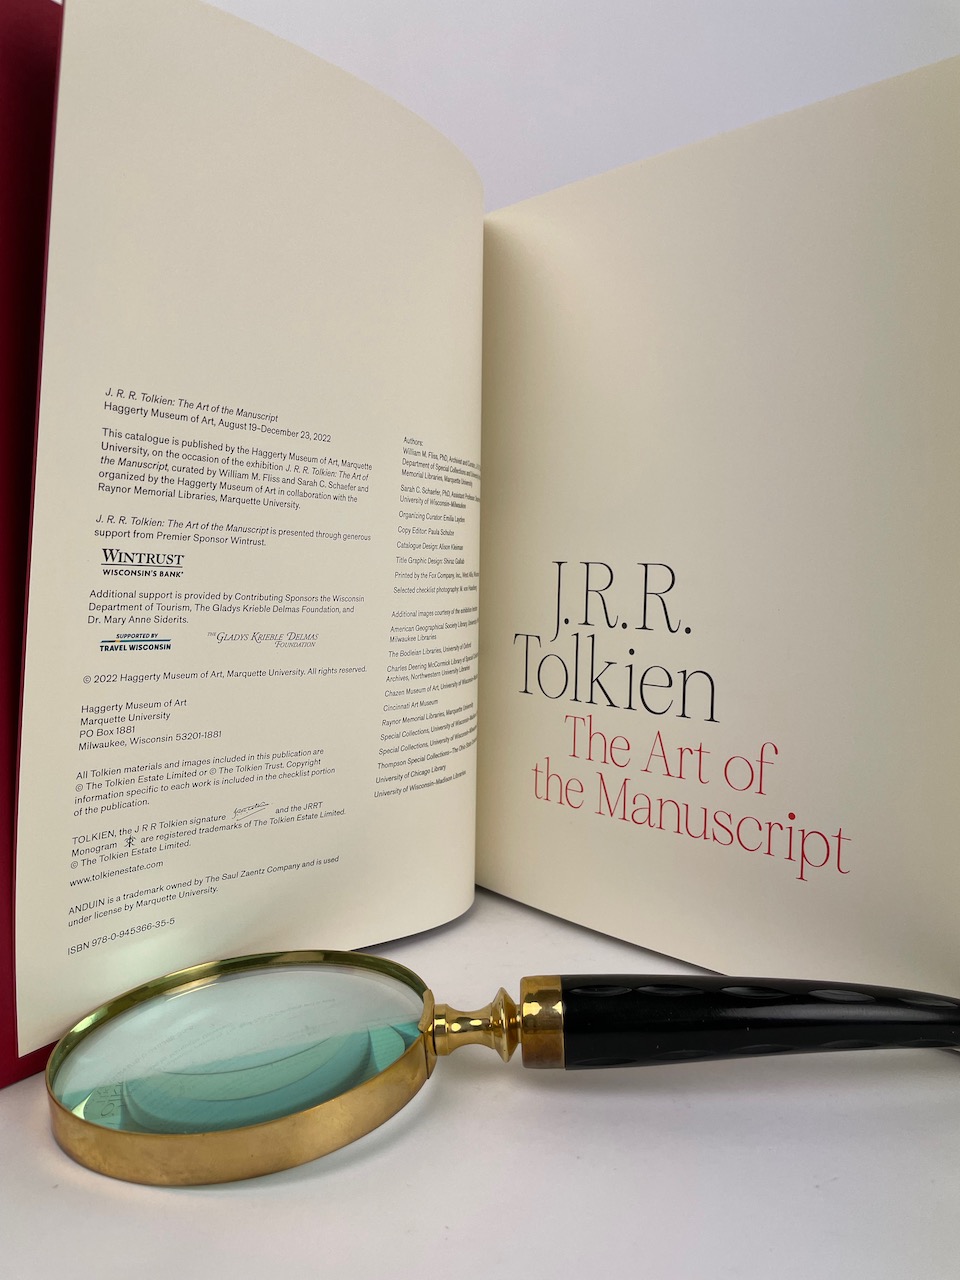 
J.R.R. Tolkien: The Art of the Manuscript - exhibition catalogue 3